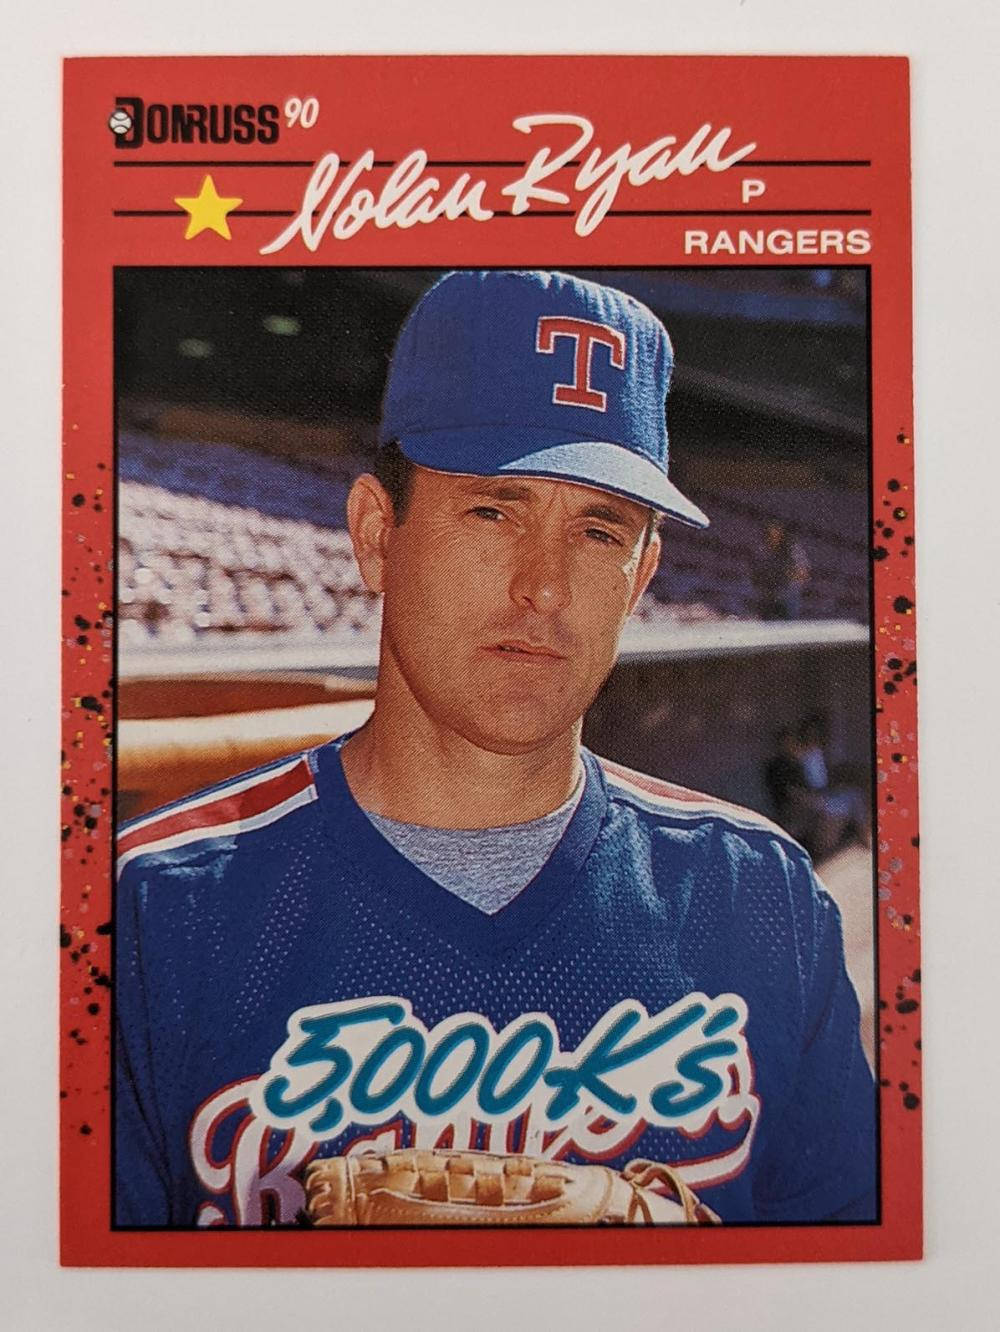 Nolan Ryan Donruss Baseball Card Background